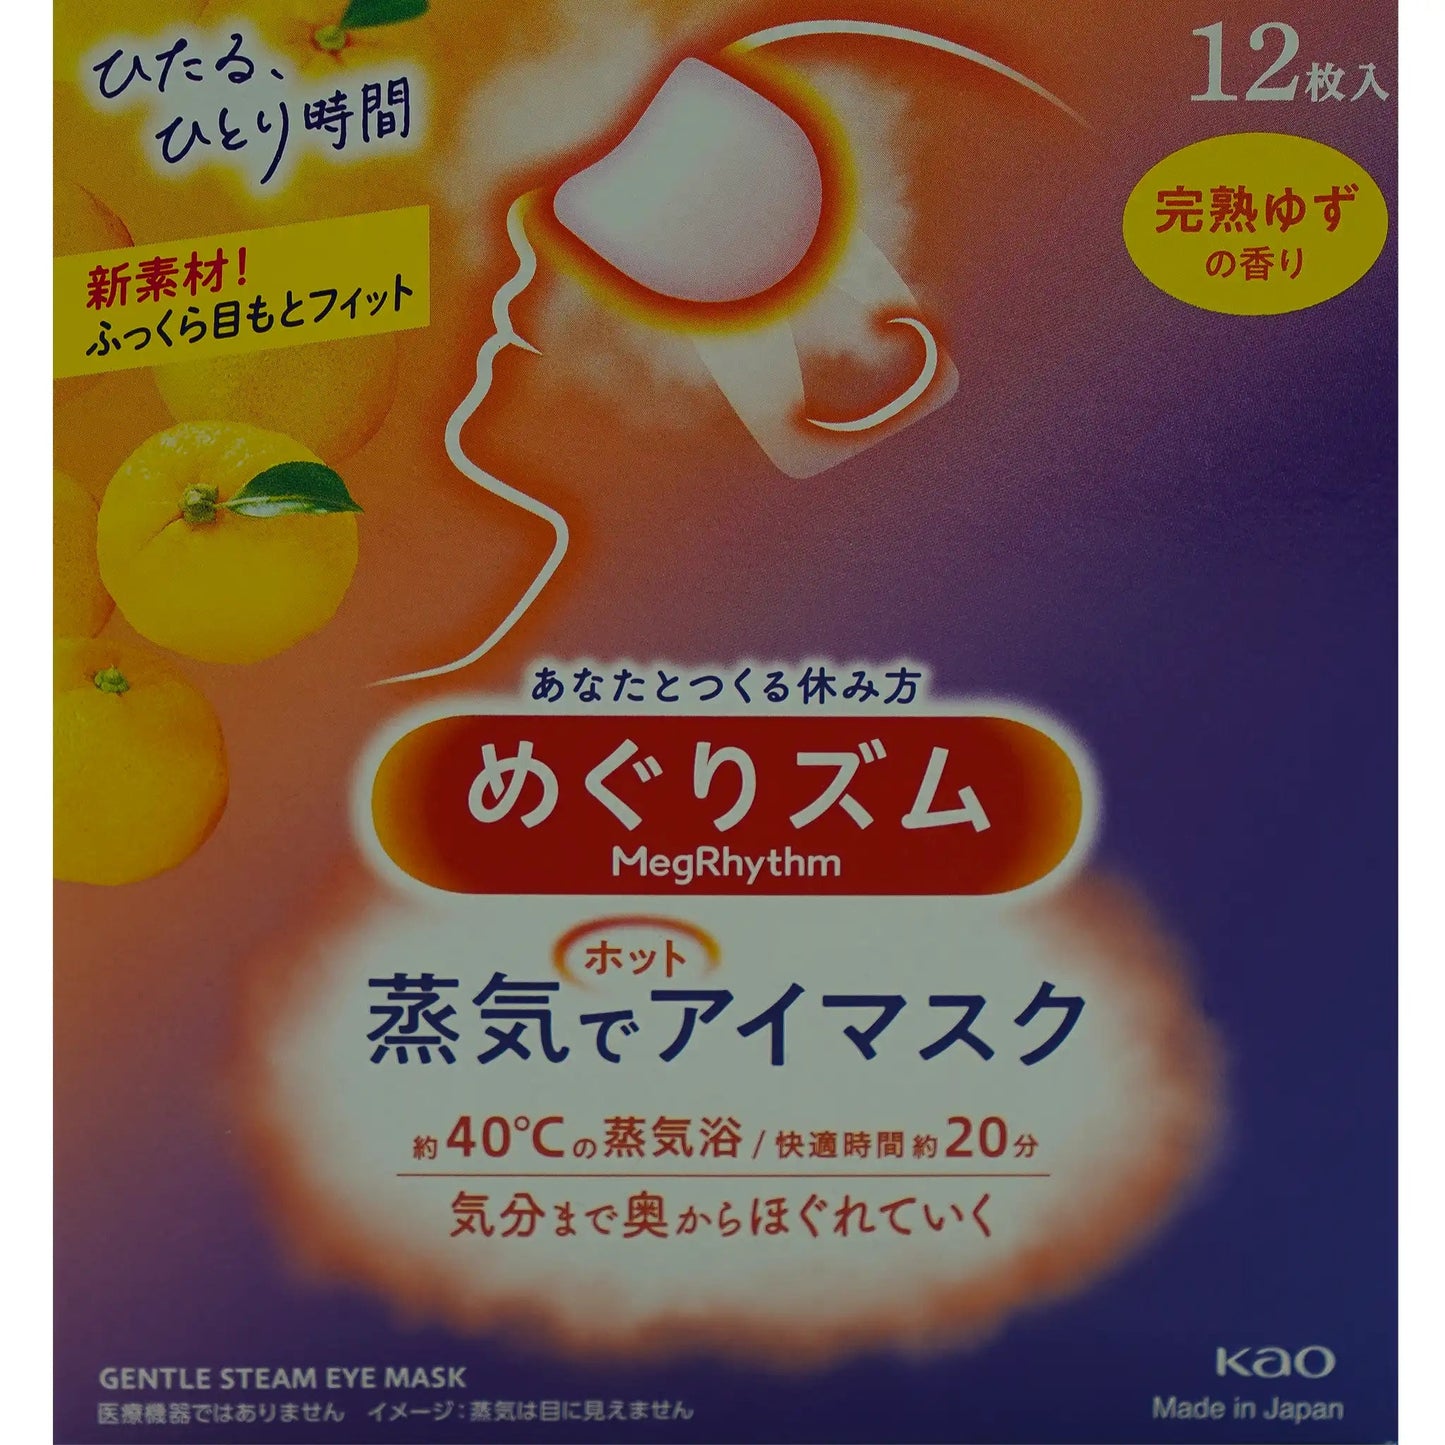 Kao Hot Steam Eye Mask Yuzu Citrus 12 Sheets 5 oz - Tokyo Central - Eye Care - Kao -